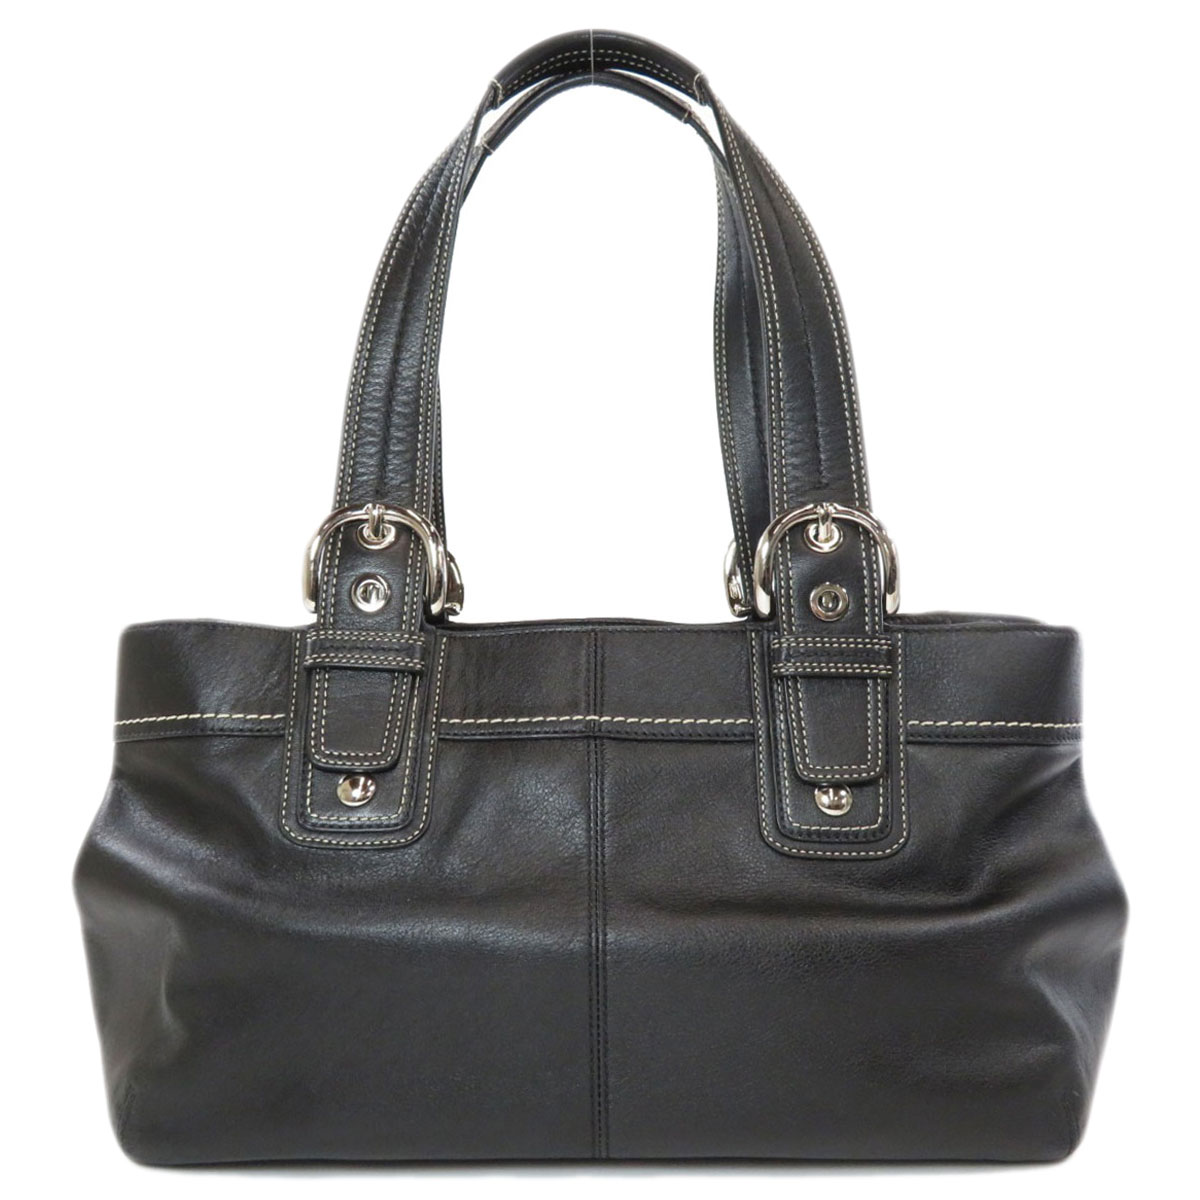 COACH F13732 Tote Bag Soho pleated logo Leather | eBay